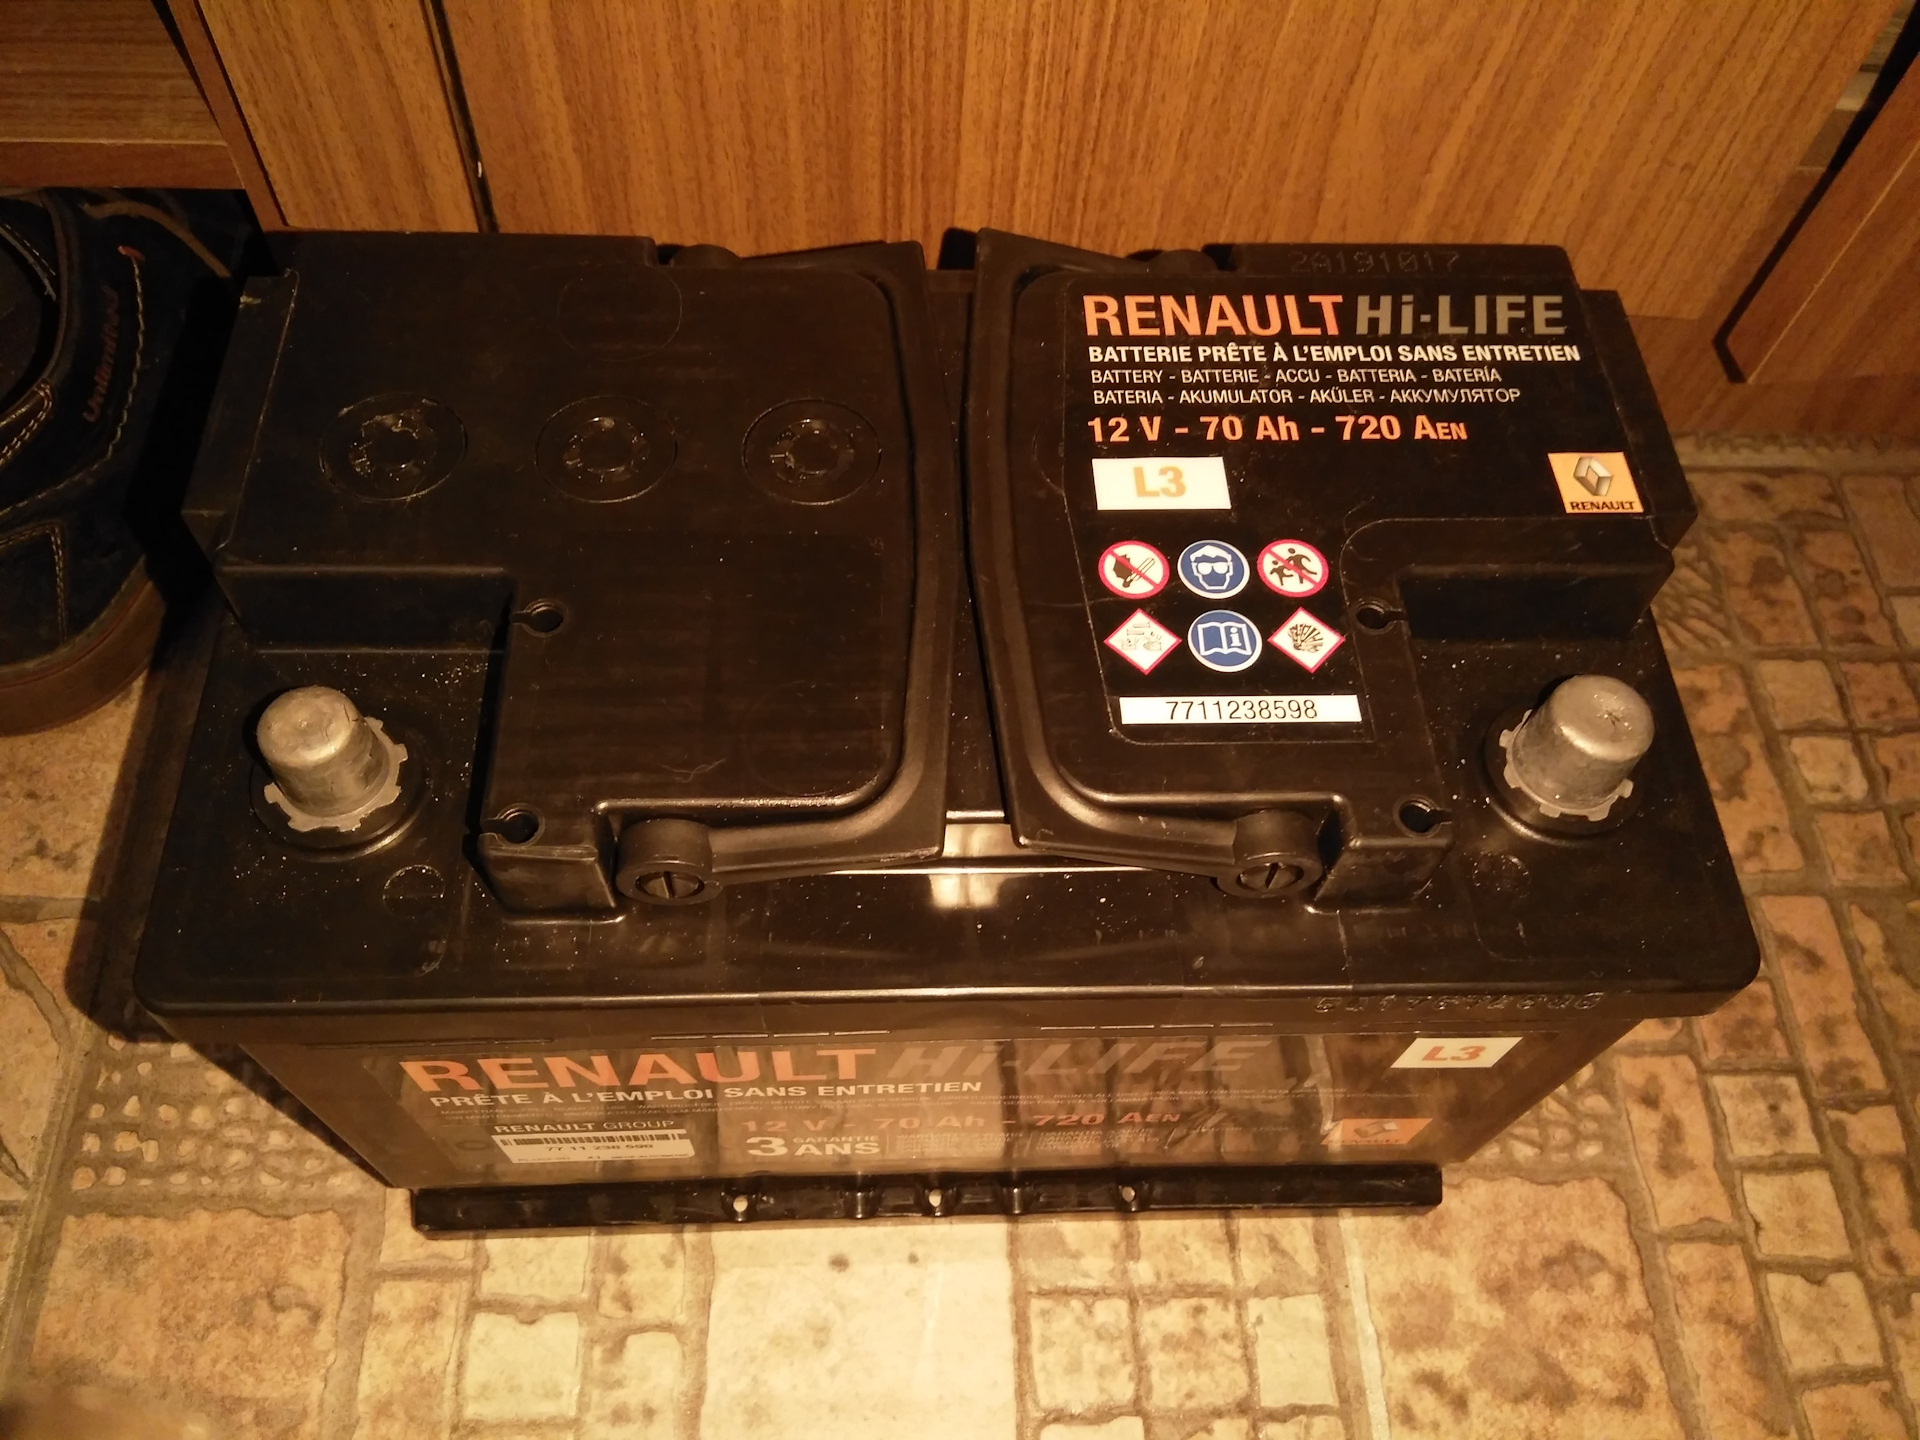 Аккумулятор рено оригинал. АКБ Renault Hi-Life. Аккумулятор Рено Хай лайф. Зарядка аккумулятора автомобиля Renault Hi-Life 600 EAN. 7711238597.